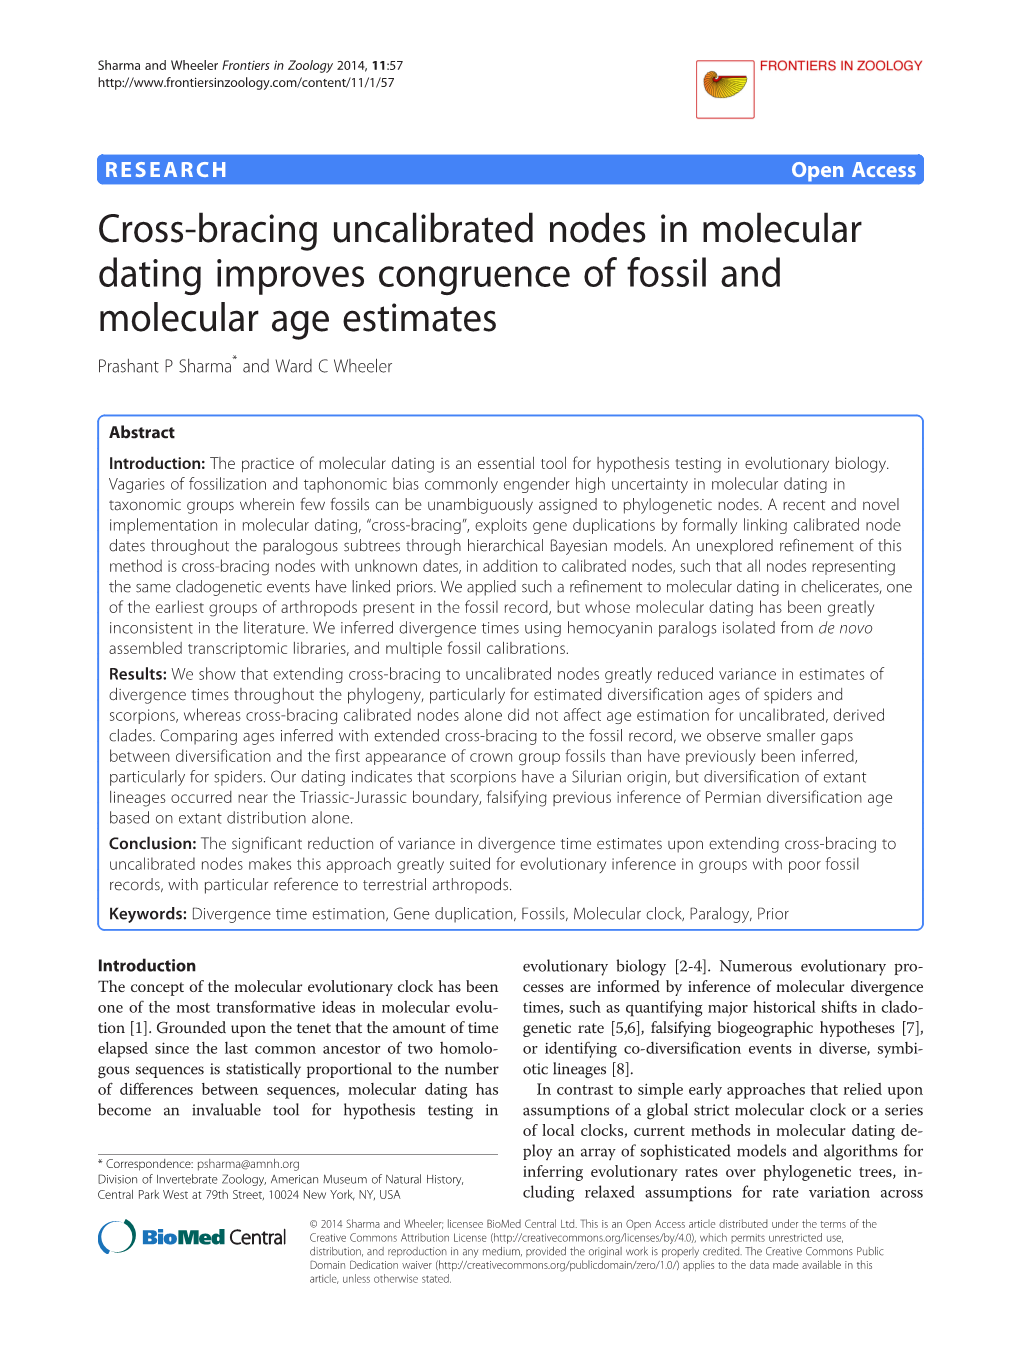 Cross-Bracing Uncalibrated Nodes in Molecular Dating Improves Congruence of Fossil and Molecular Age Estimates Prashant P Sharma* and Ward C Wheeler